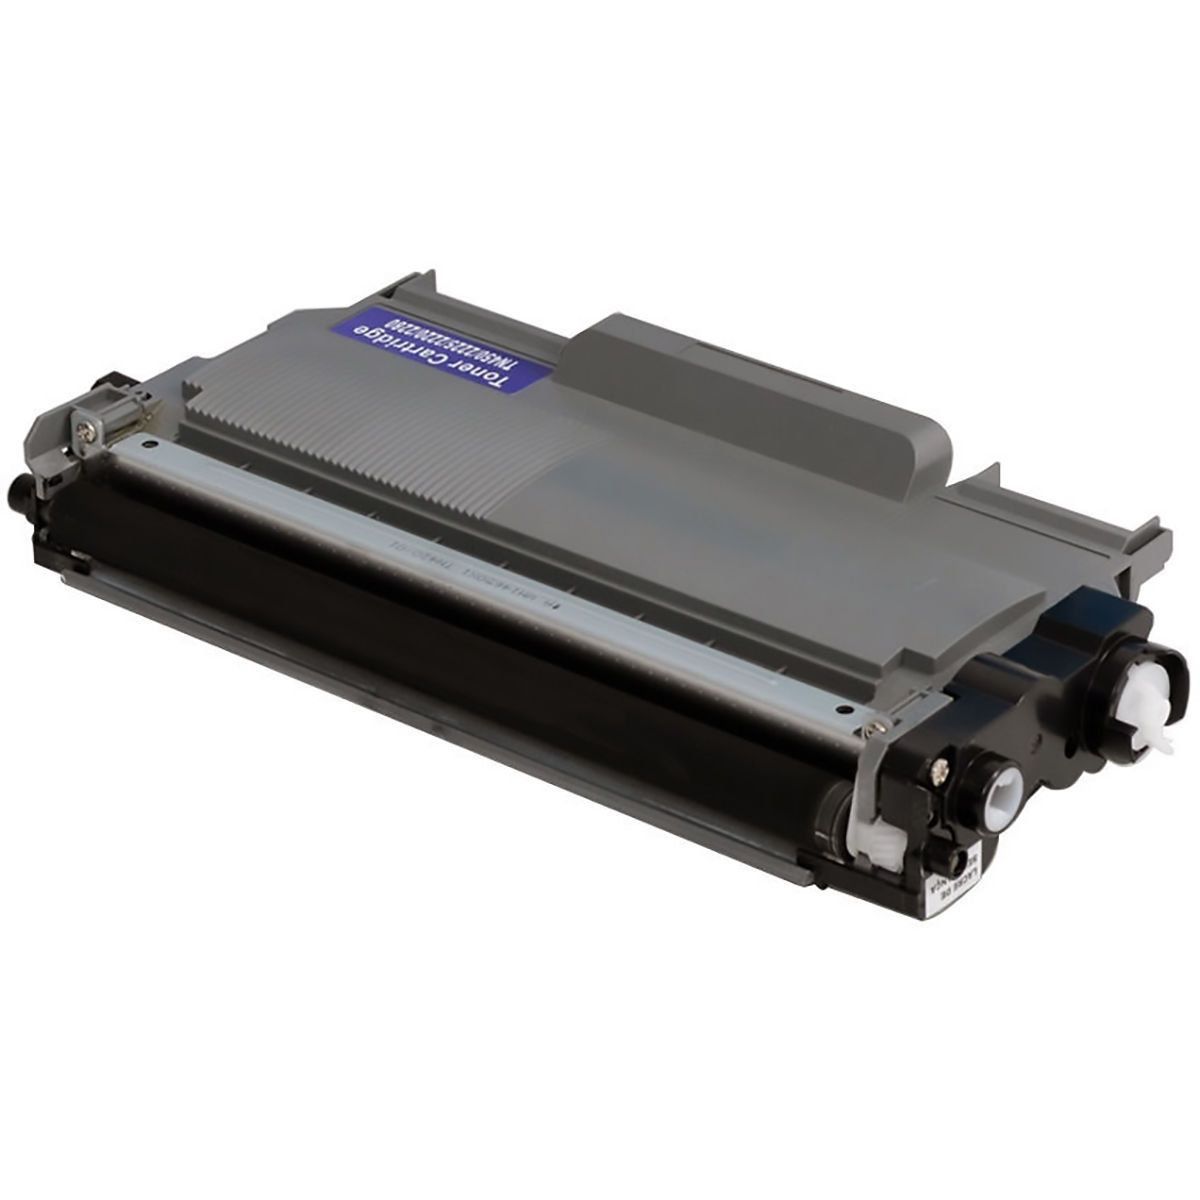 Toner Compatível com Impressora Brother DCP-7065dn DCP-7065 DCP-7055 DCP7065dn DCP7065 DCP7055 Preto 2.600